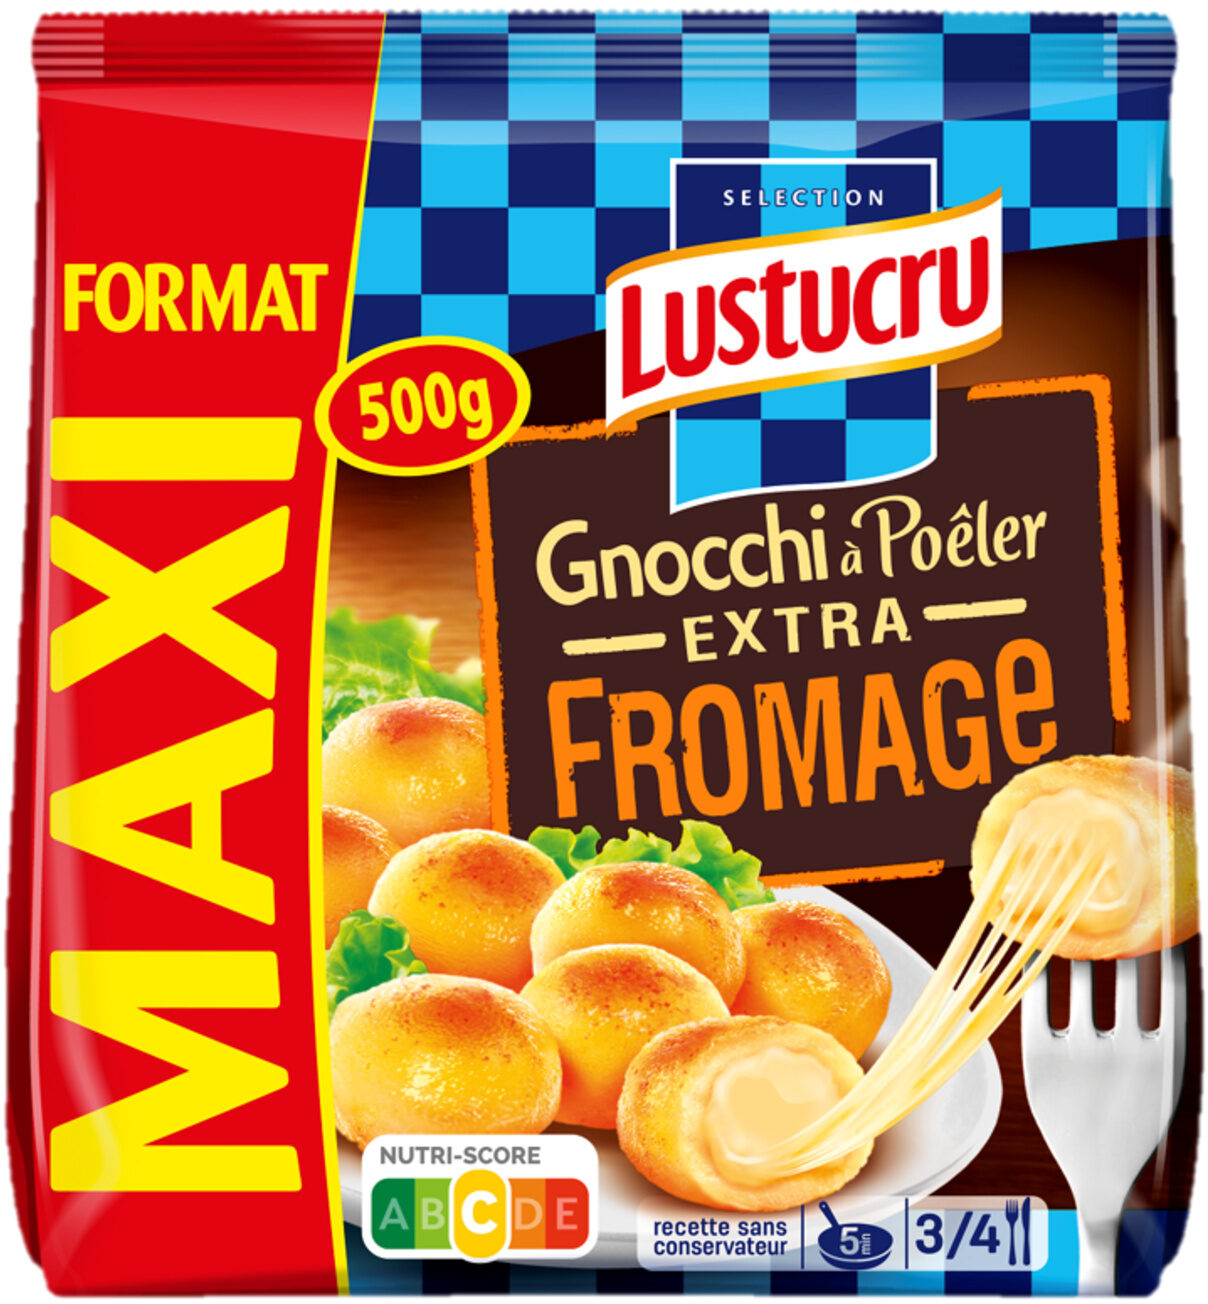 Lustucru gnocchi a poeler extra fromage maxi 500g - Produkt - fr